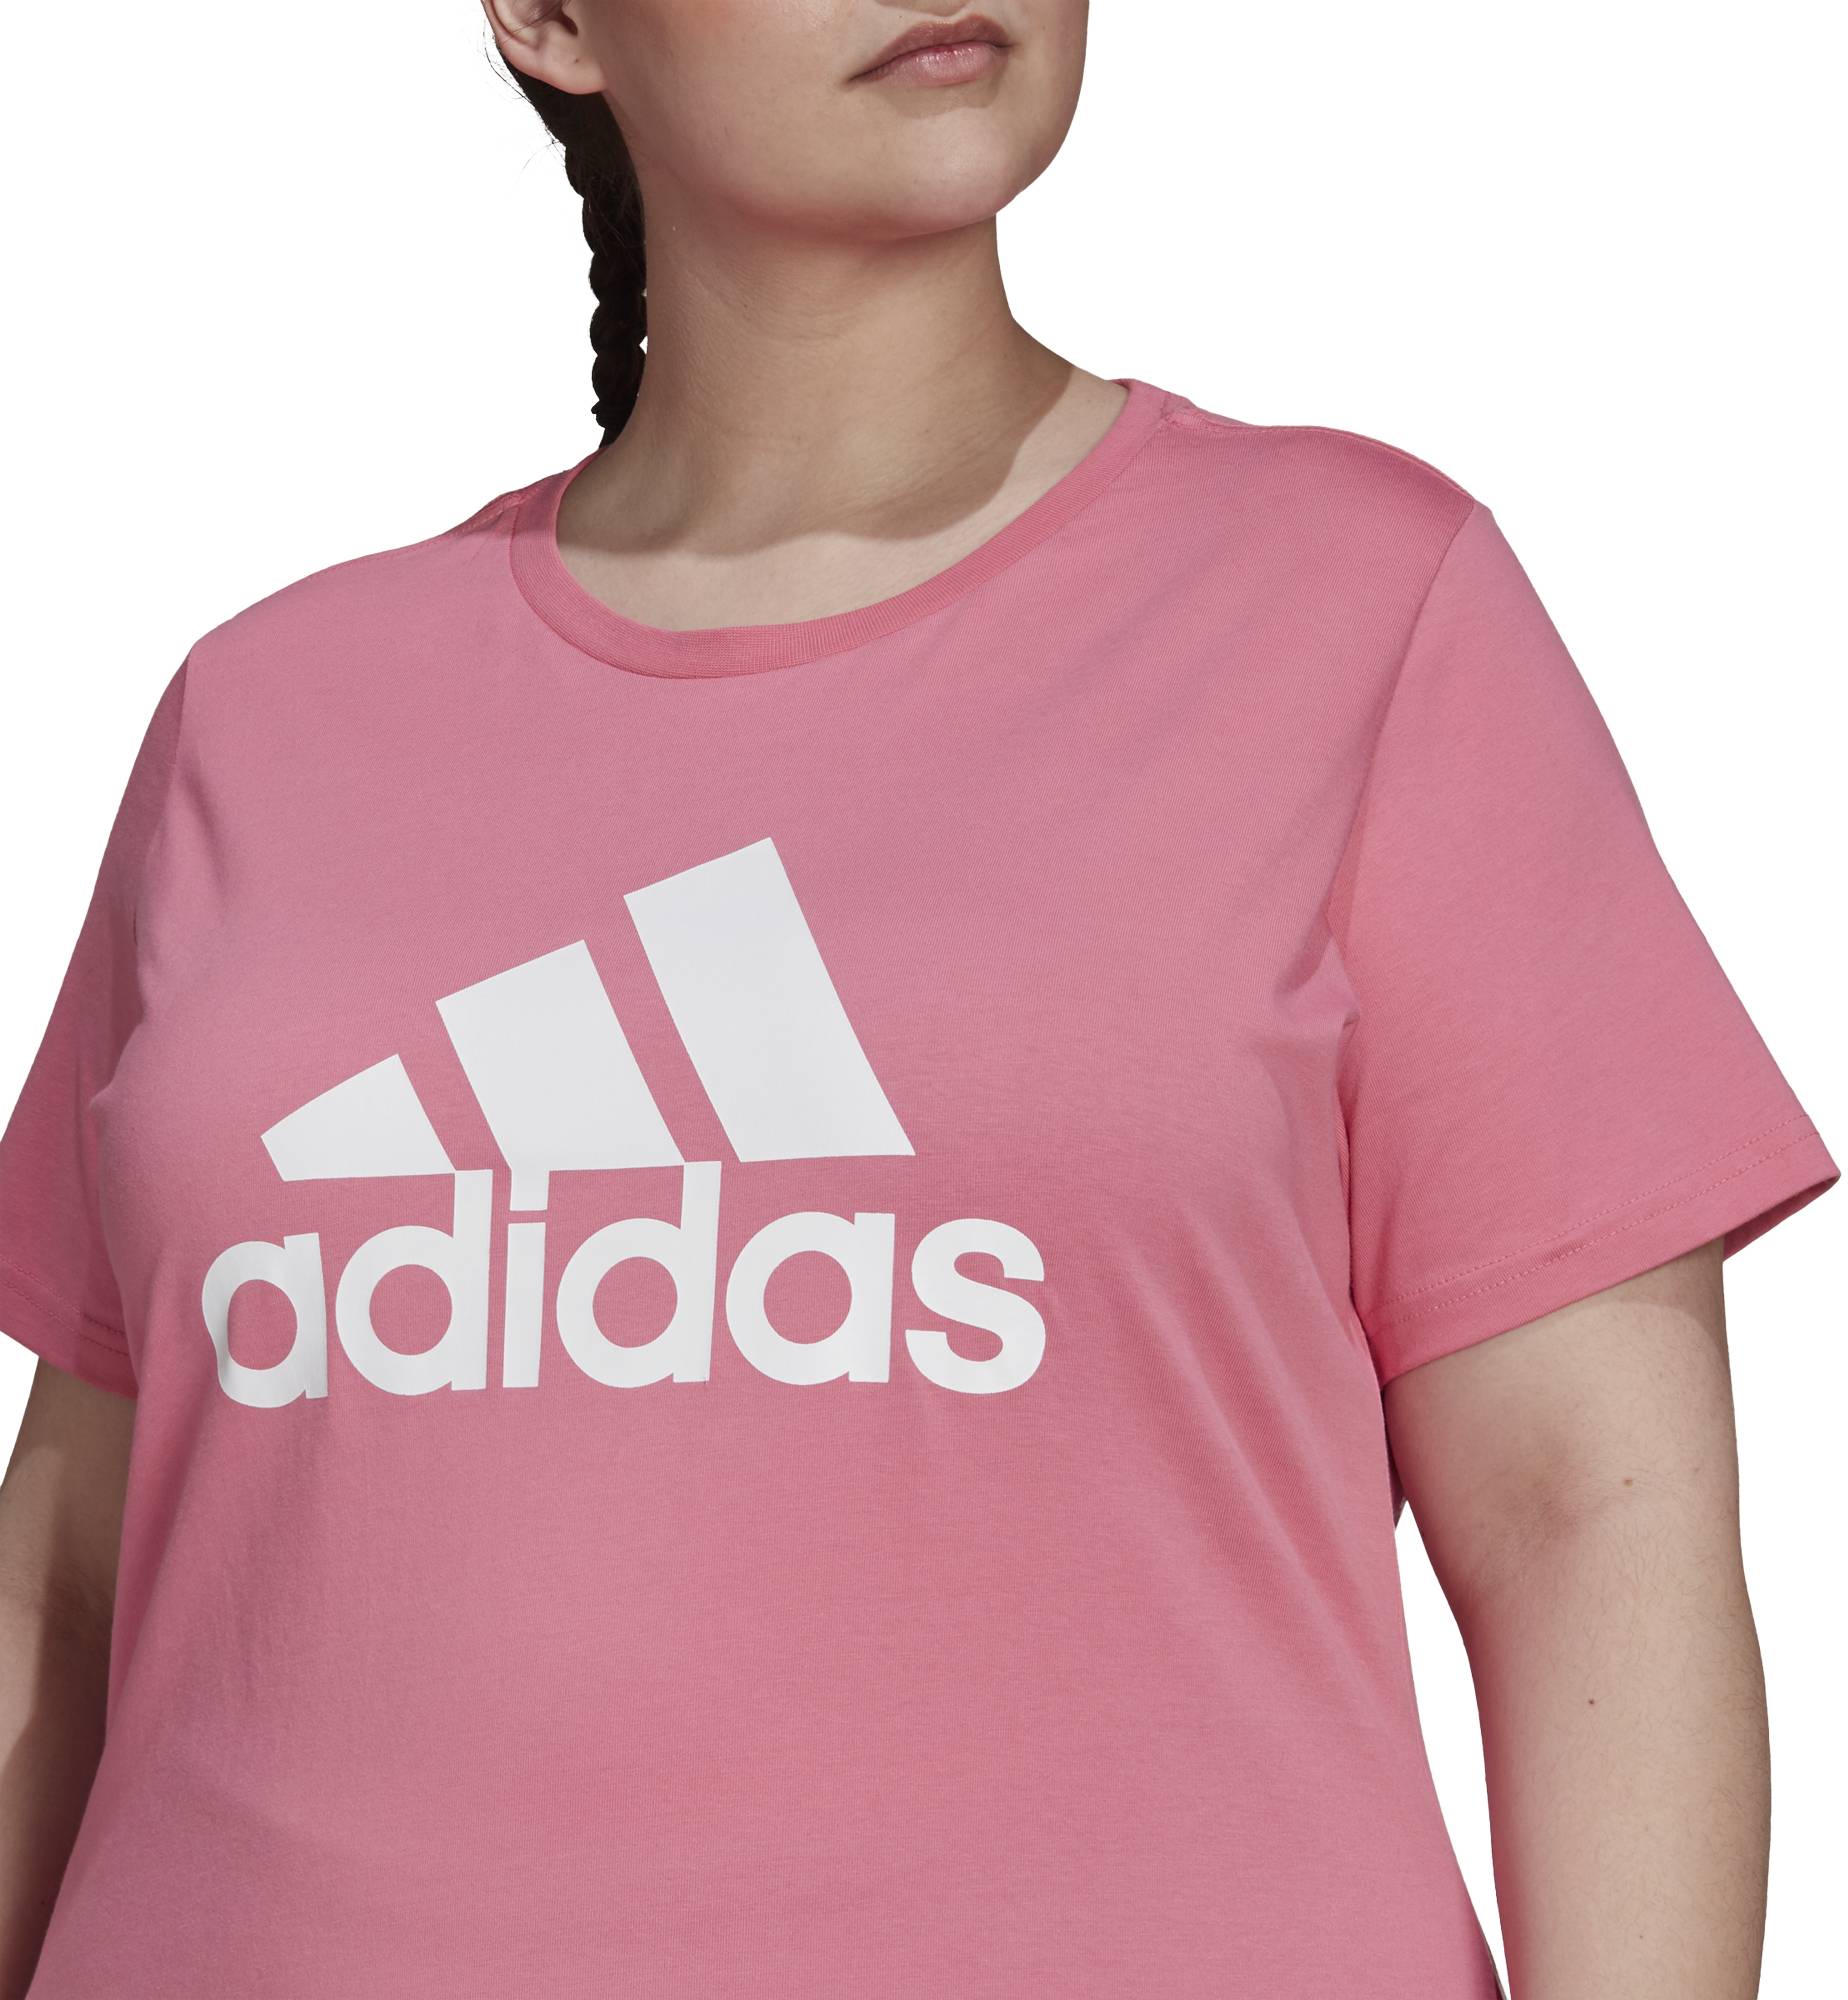 Women’s plus size T-shirt